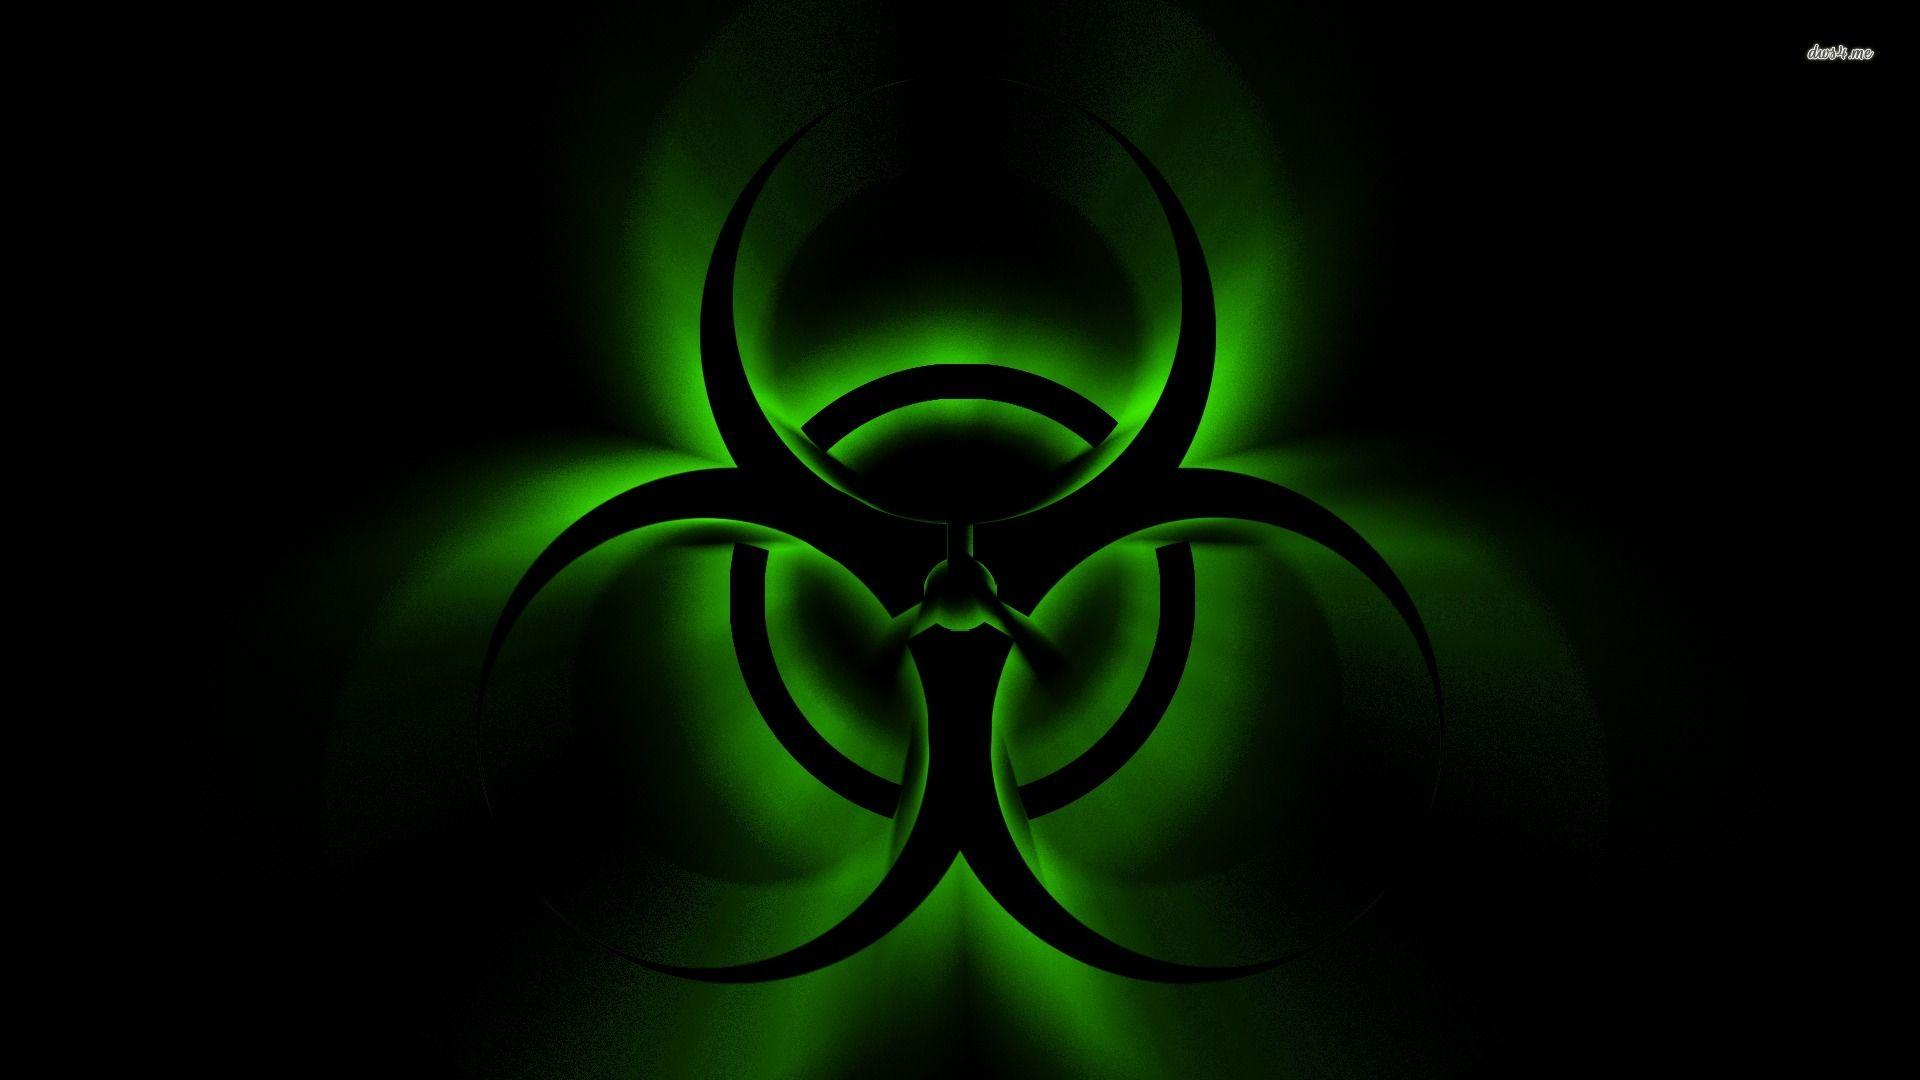 Others Background, 607281 Biohazard Symbol Wallpaper,